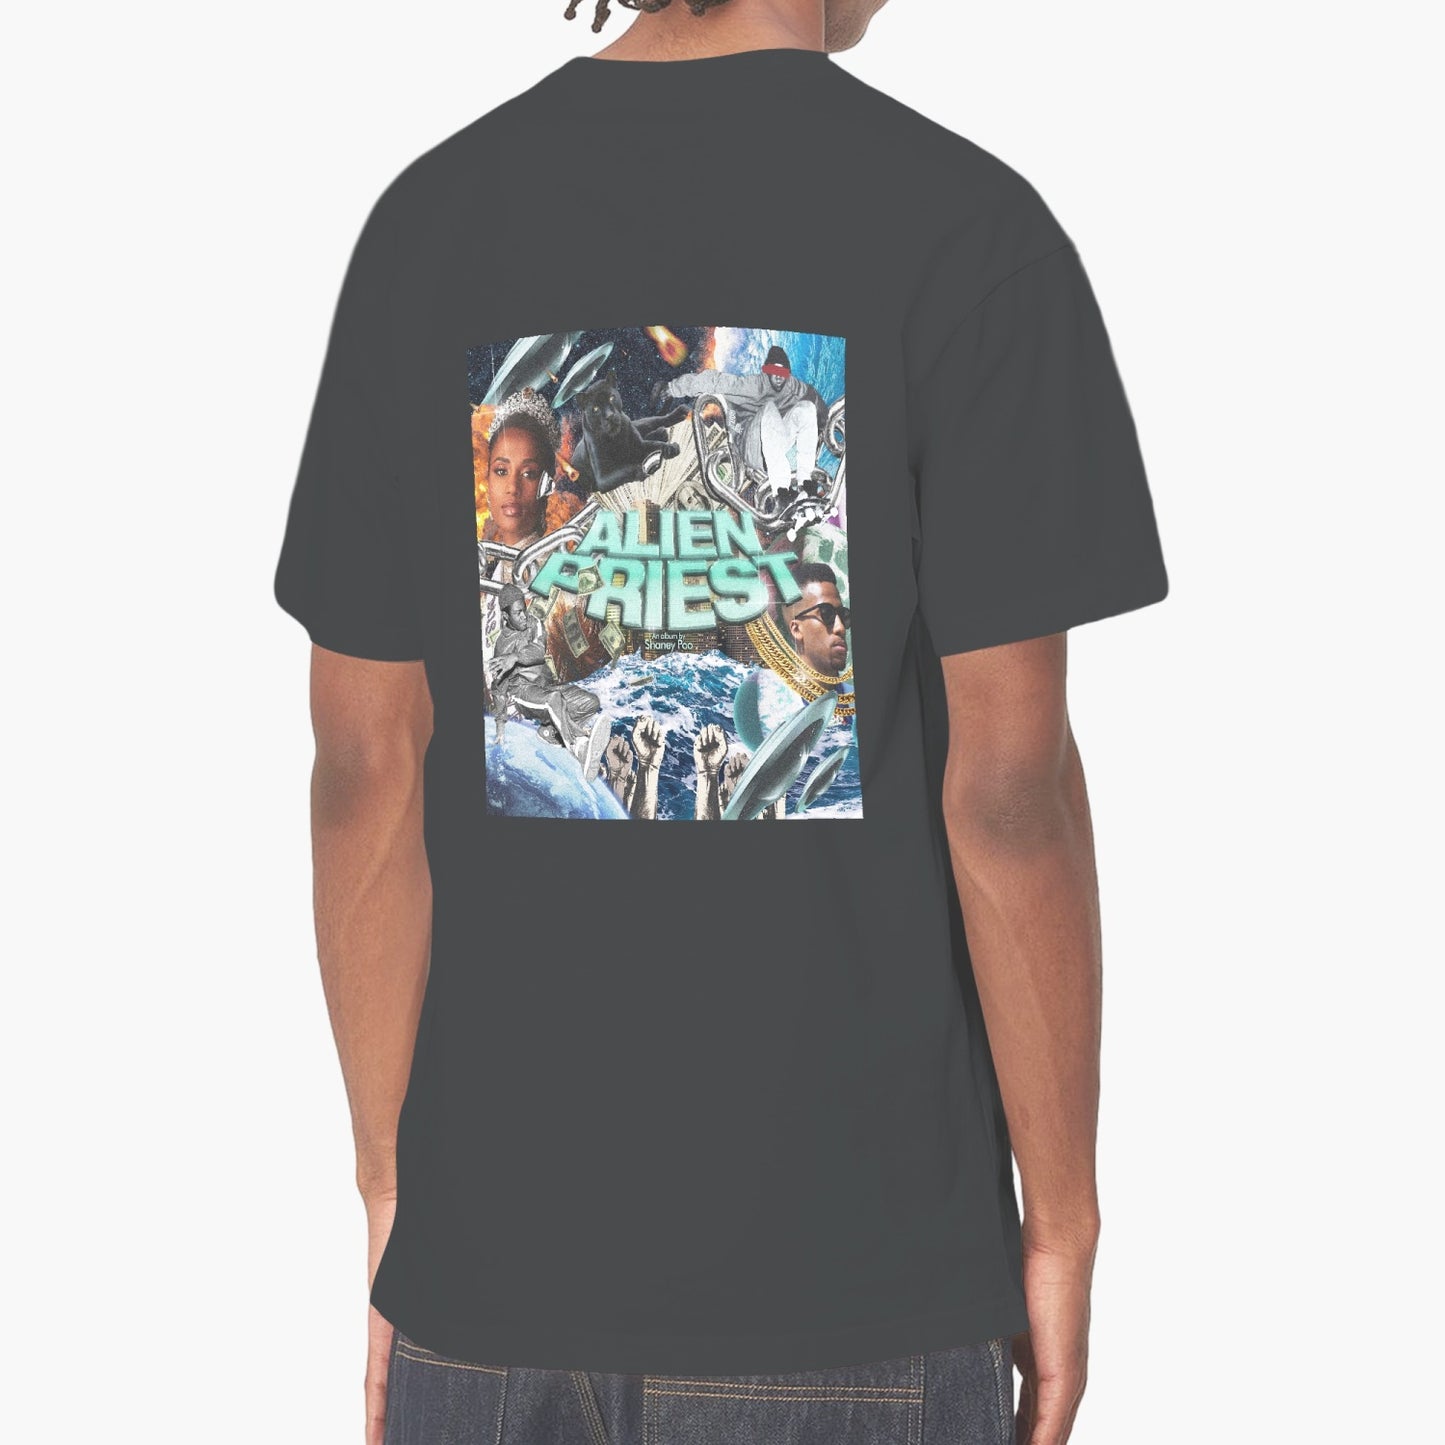 4. Alien Priest T-shirt